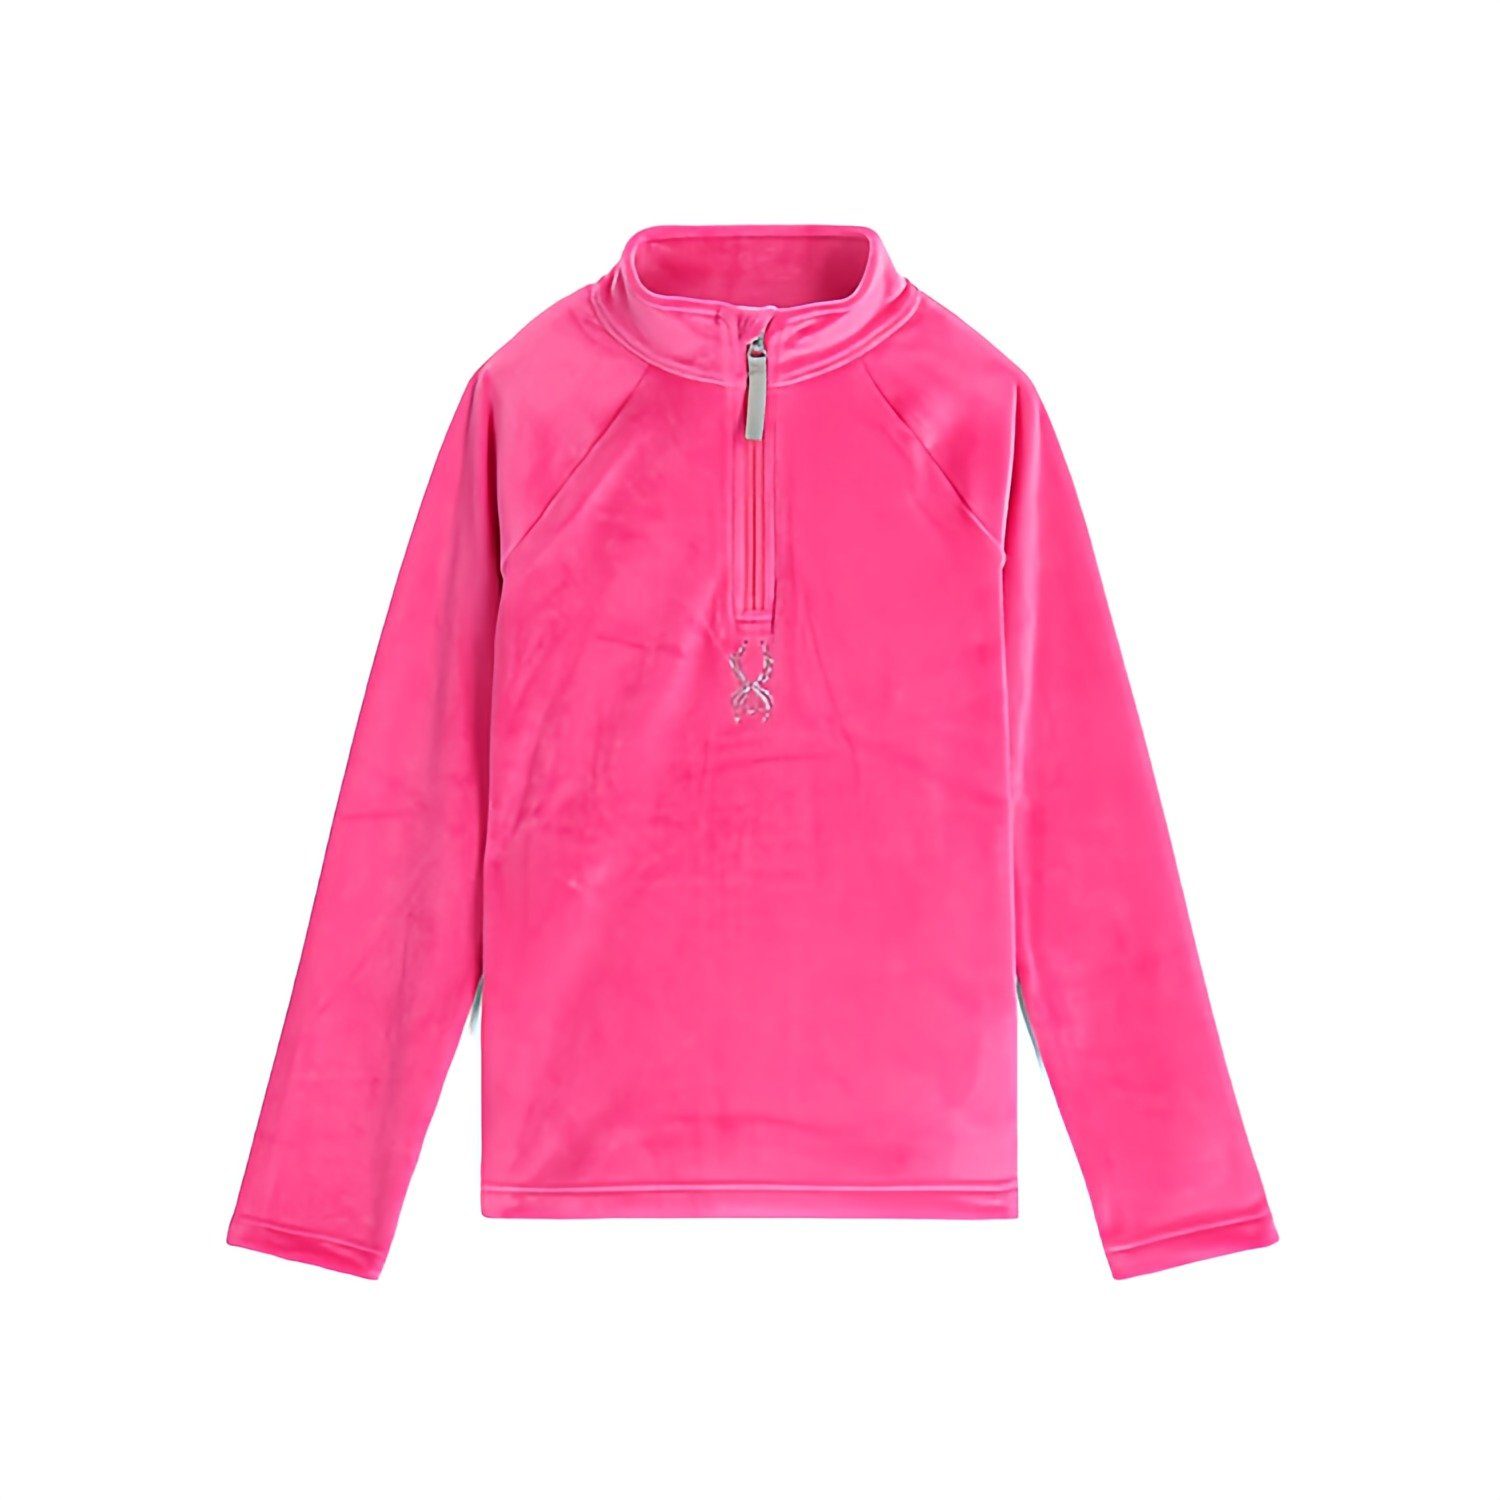 Shimmer Spyder Langarmshirt Zip für Fleece pink Mädchen Langarm Bug